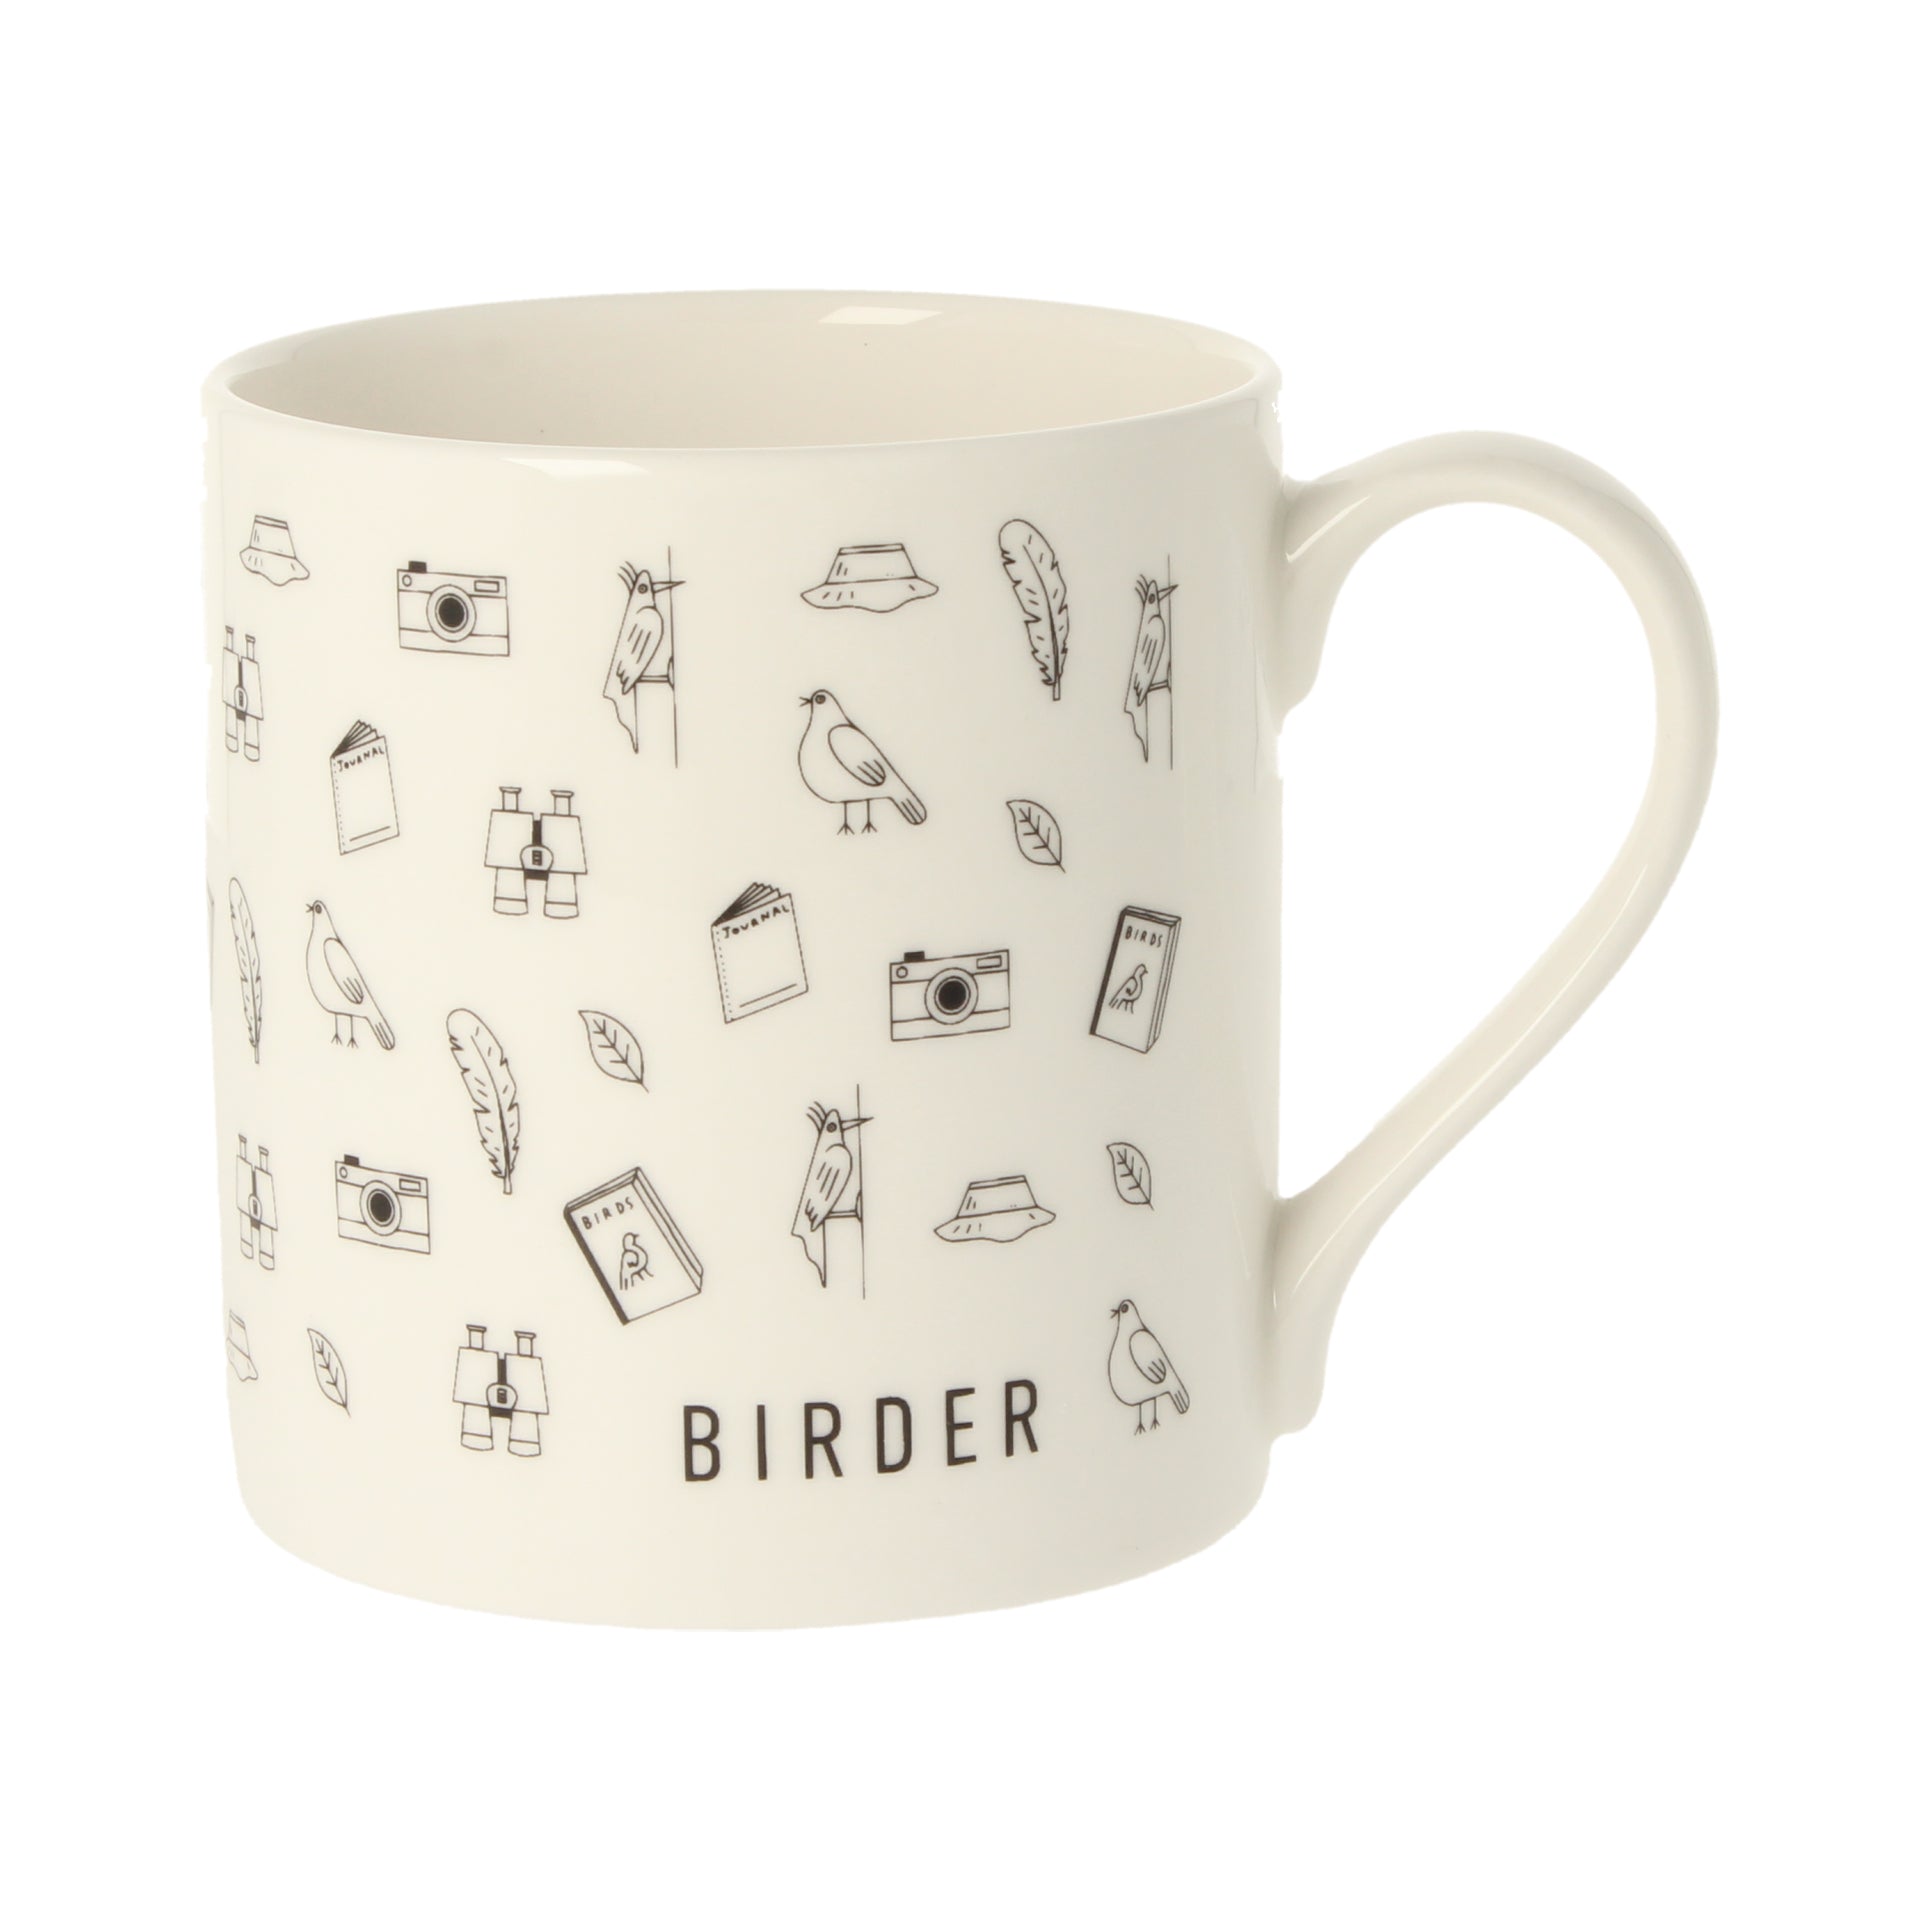 Birder Mug